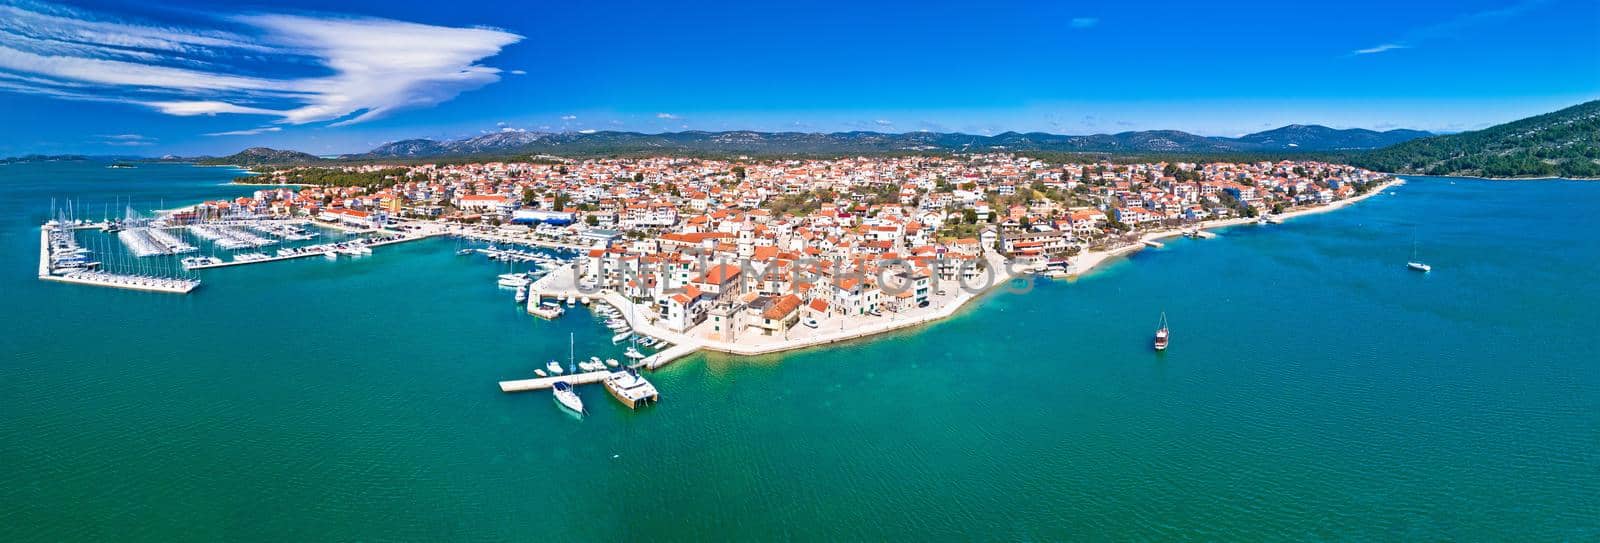 Town of Pirovac coastline aerial panoramic view, Dalmatia archipelago of Adriatic sea in Croatia